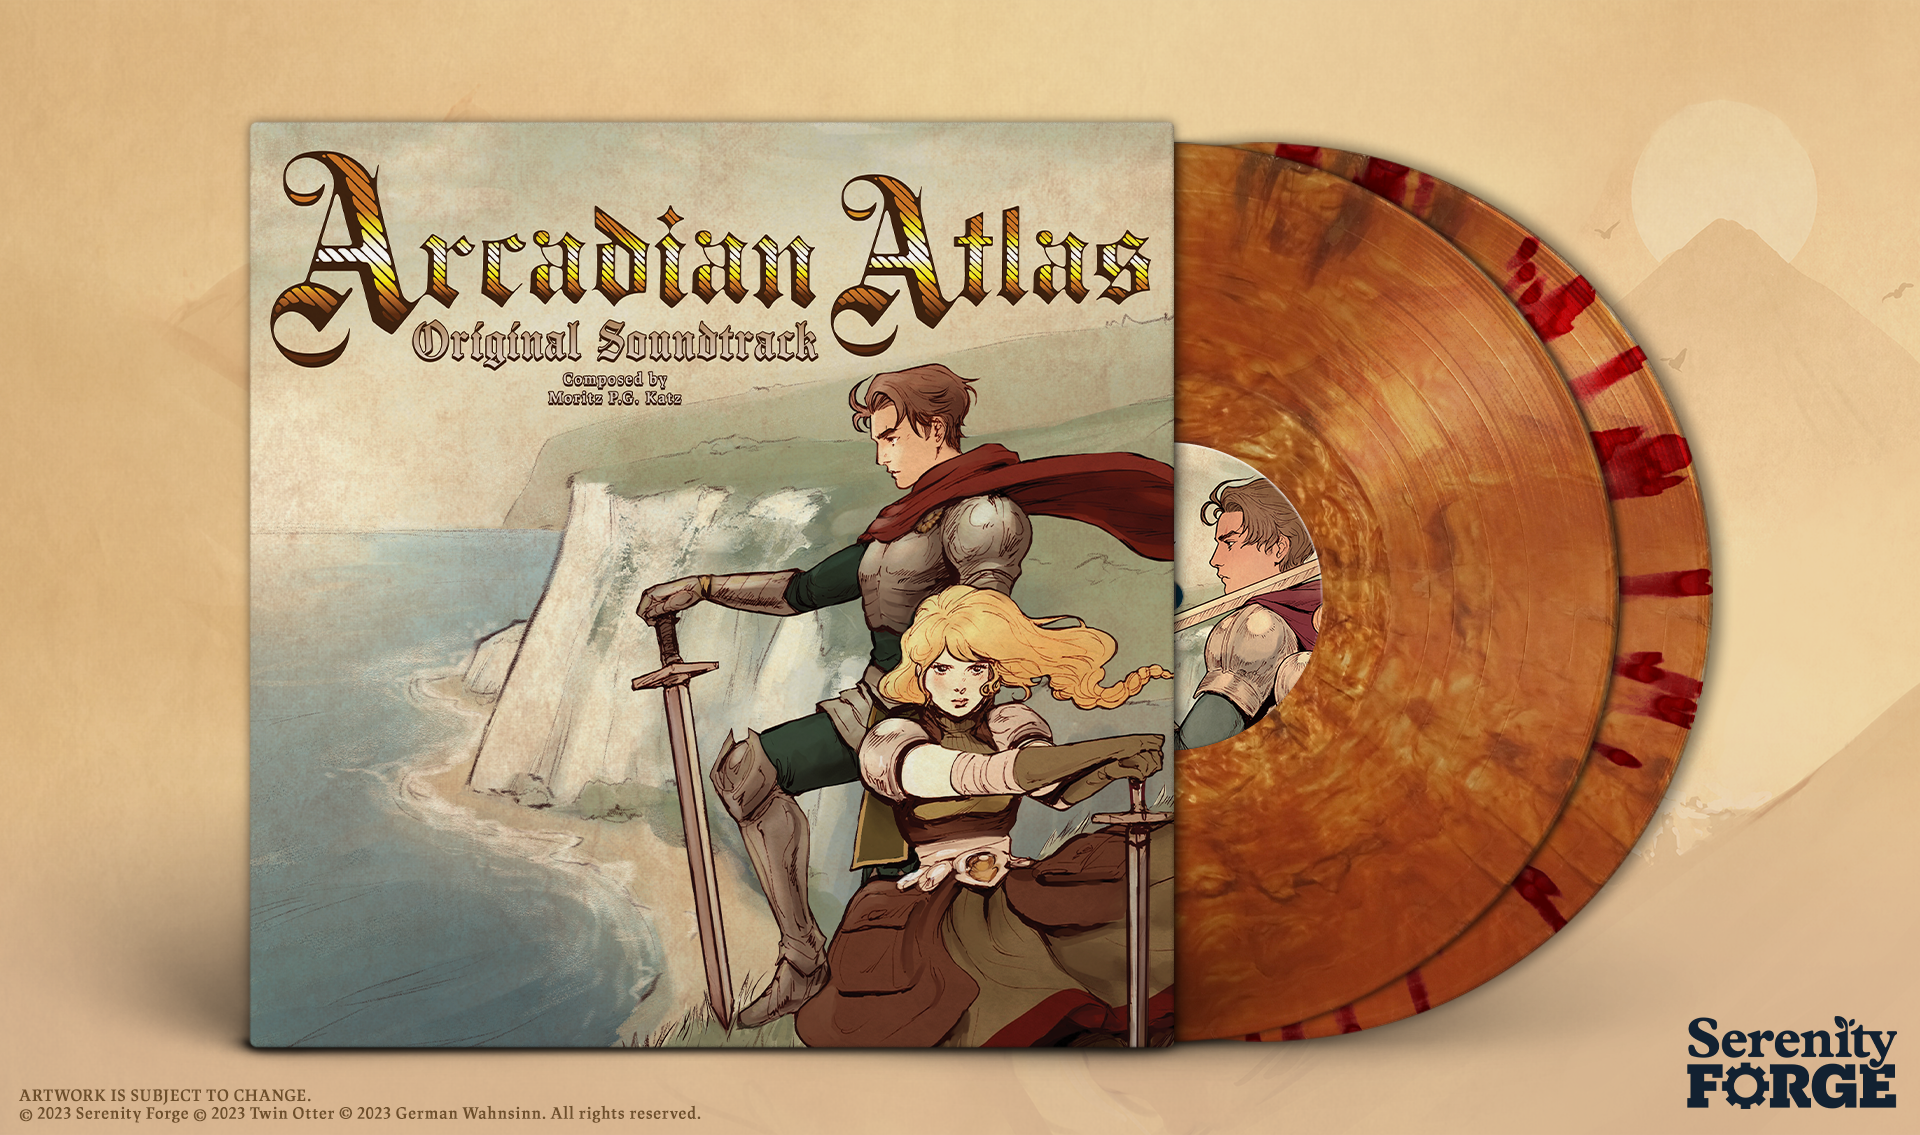 Arcadian Atlas - 2xLP Vinyl Soundtrack